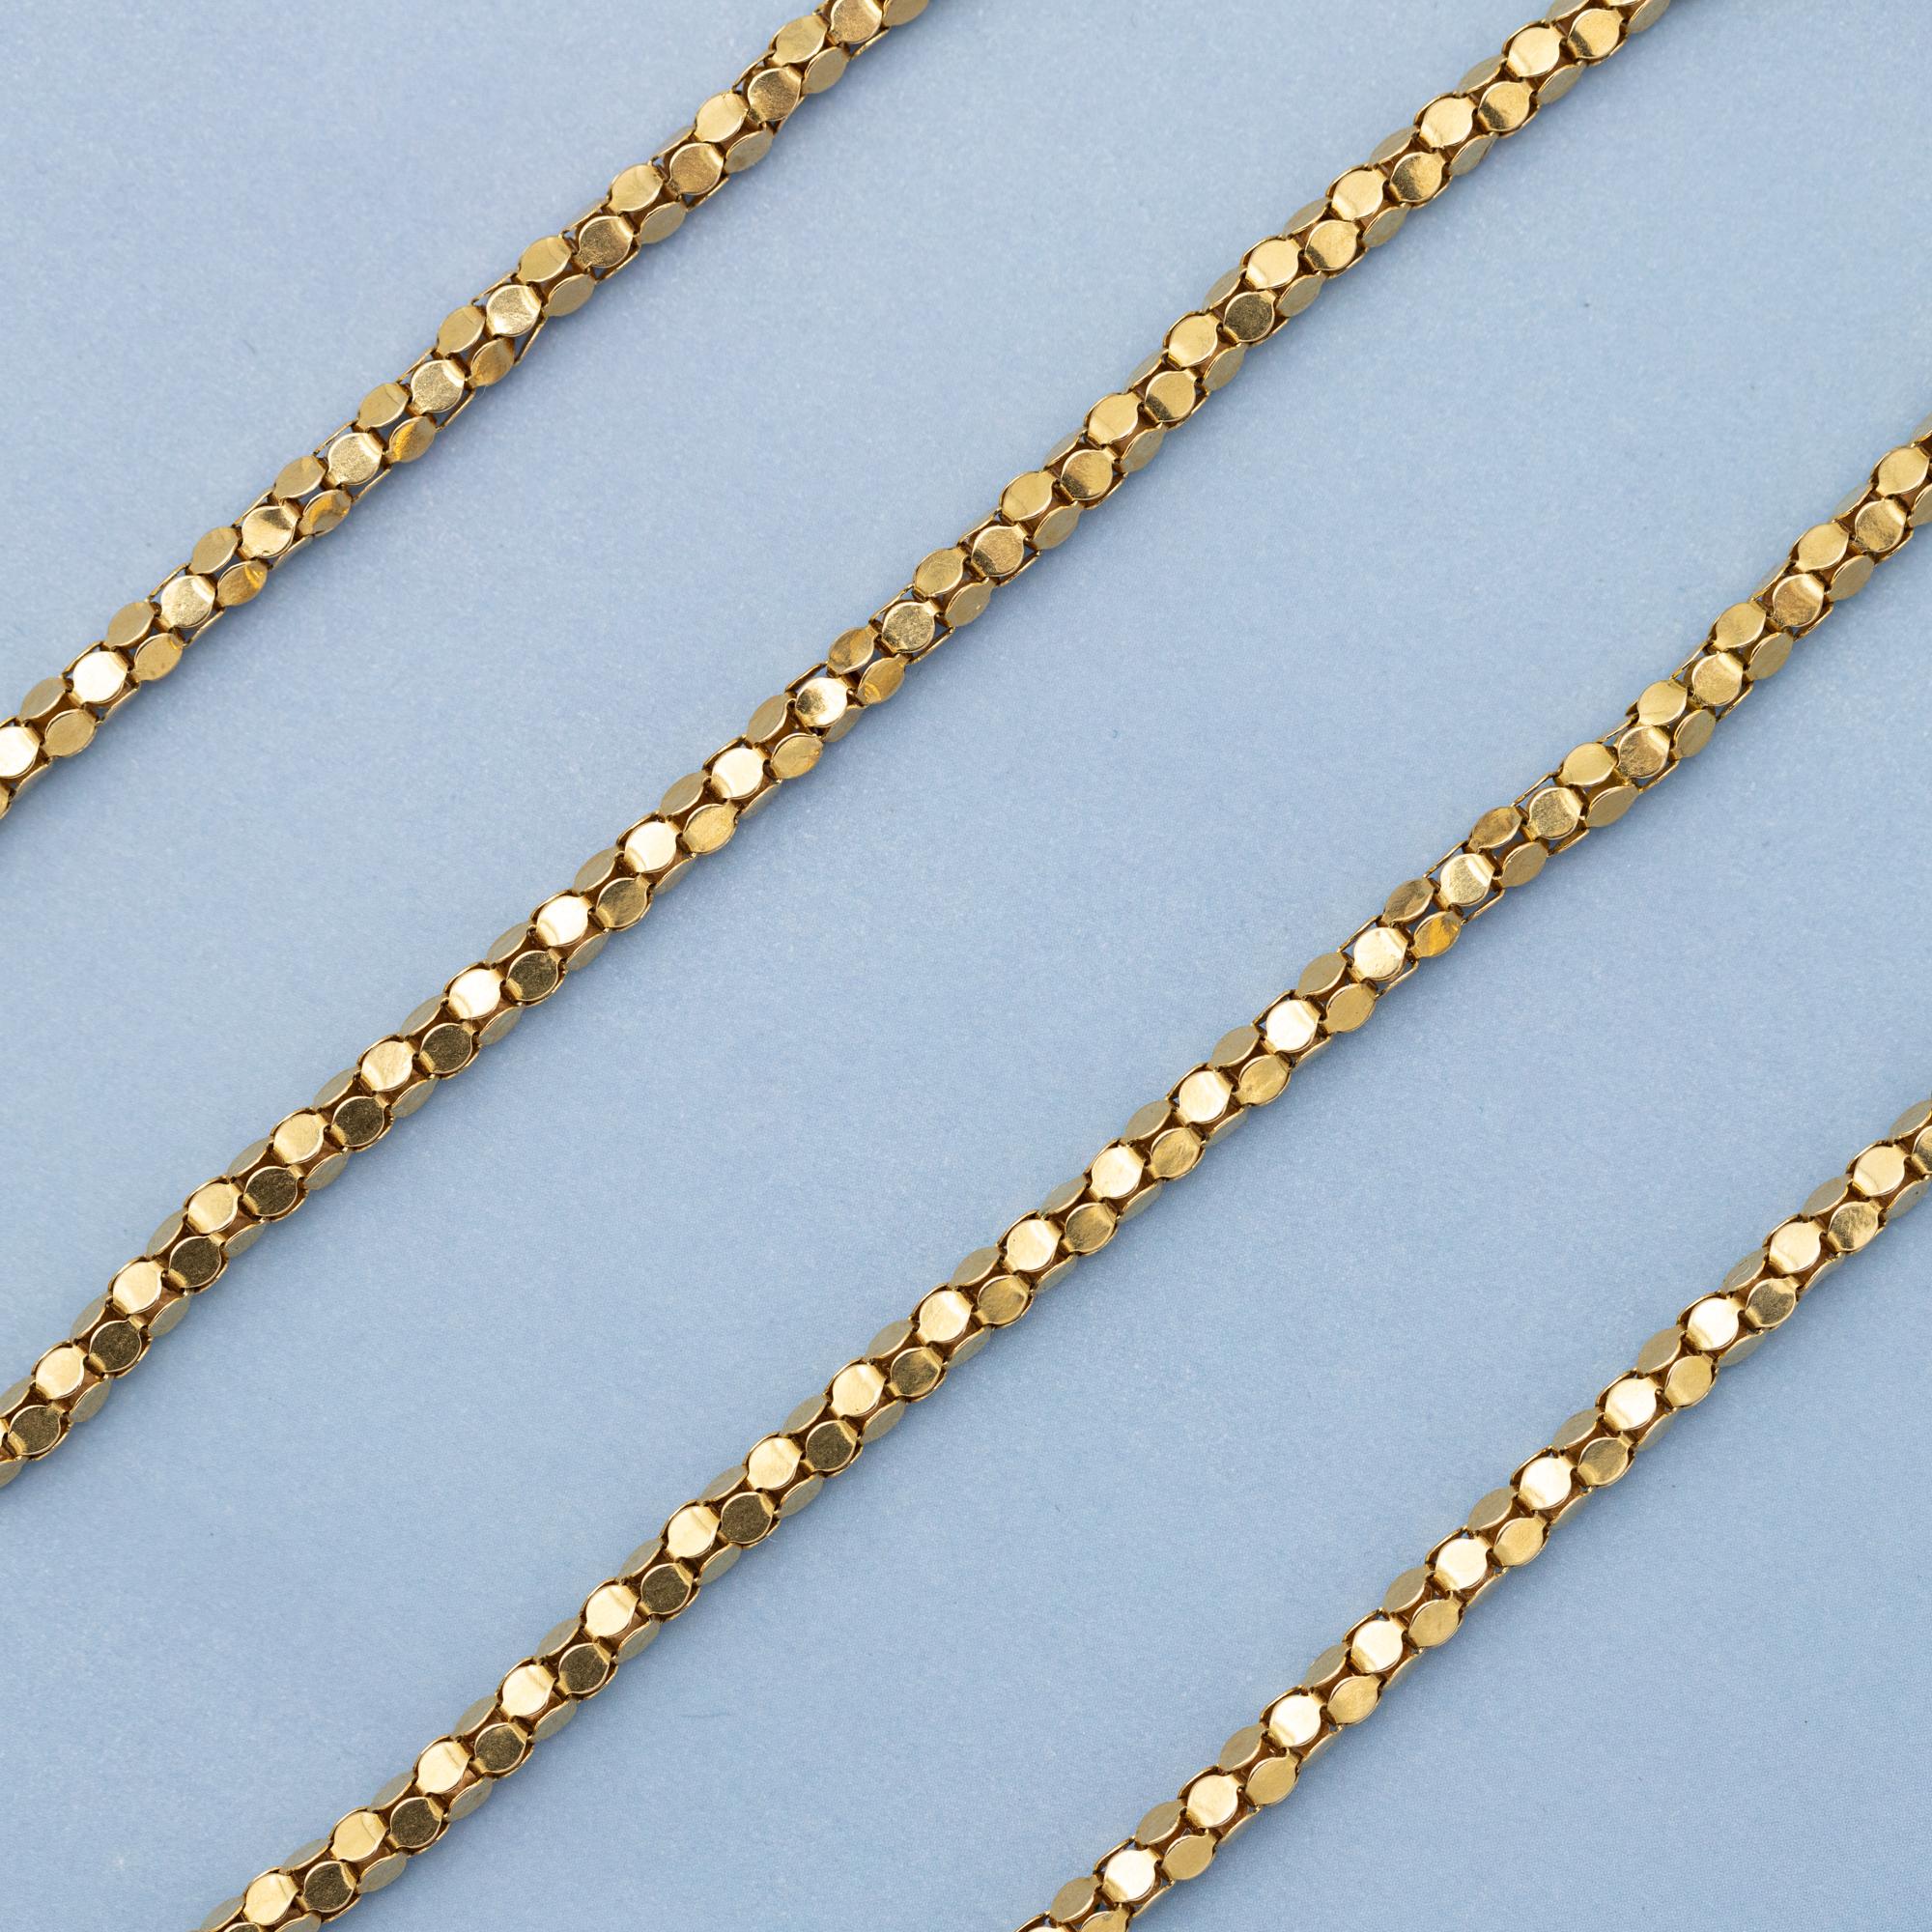 18k solid gold Retro popcorn chain - 1960's necklace - 44.5 cm - 17.25 inch 4